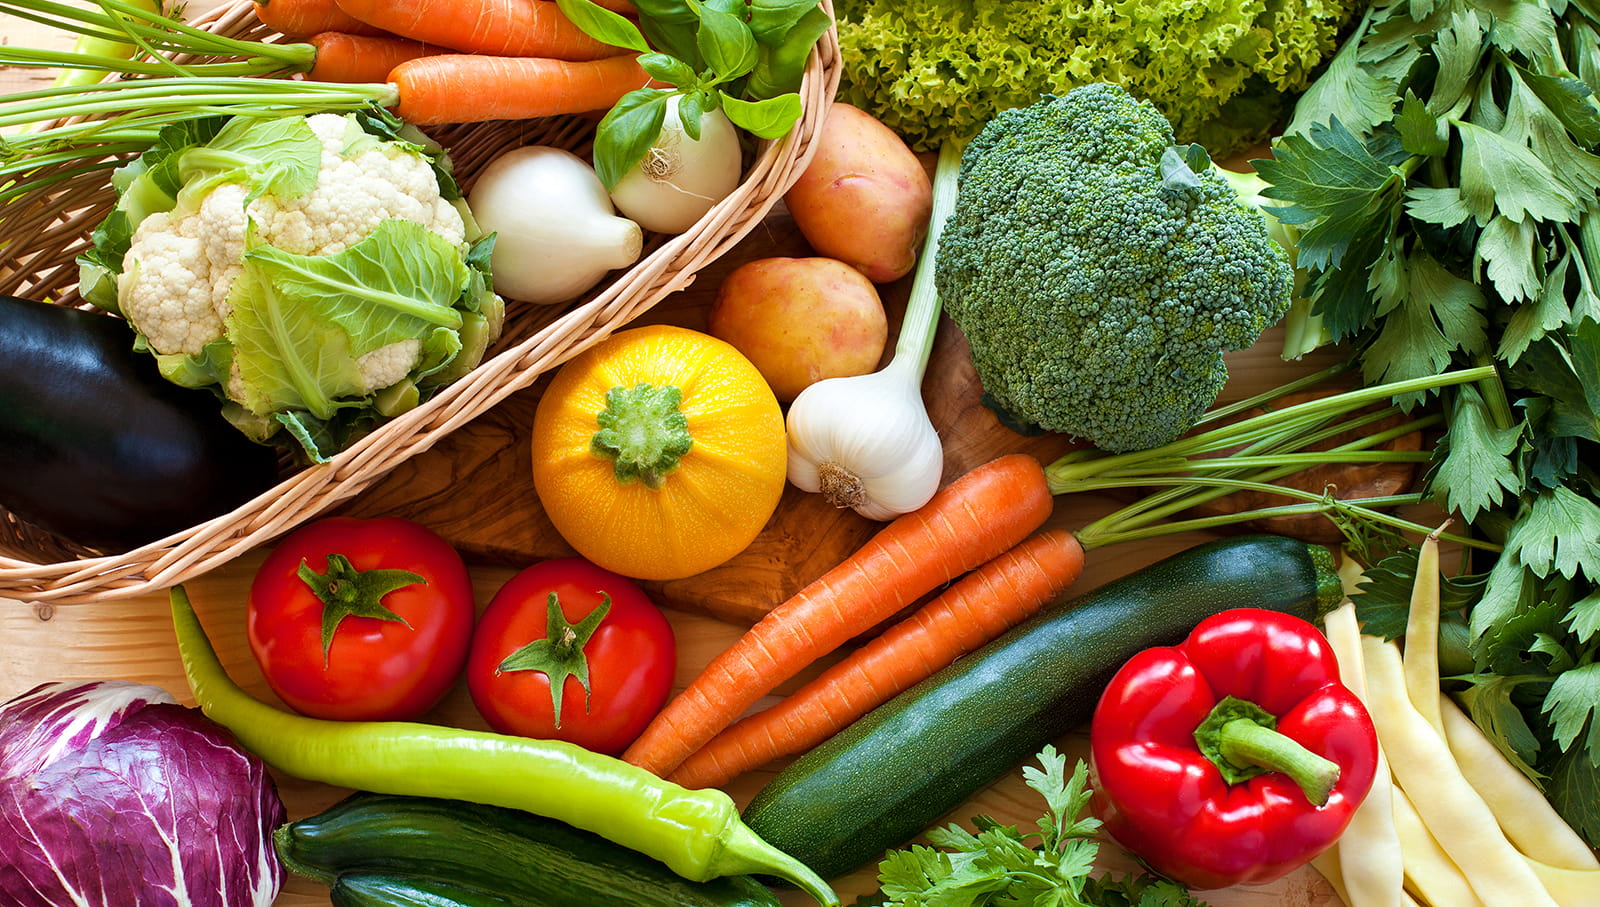 Hi-res photo of various vegetables